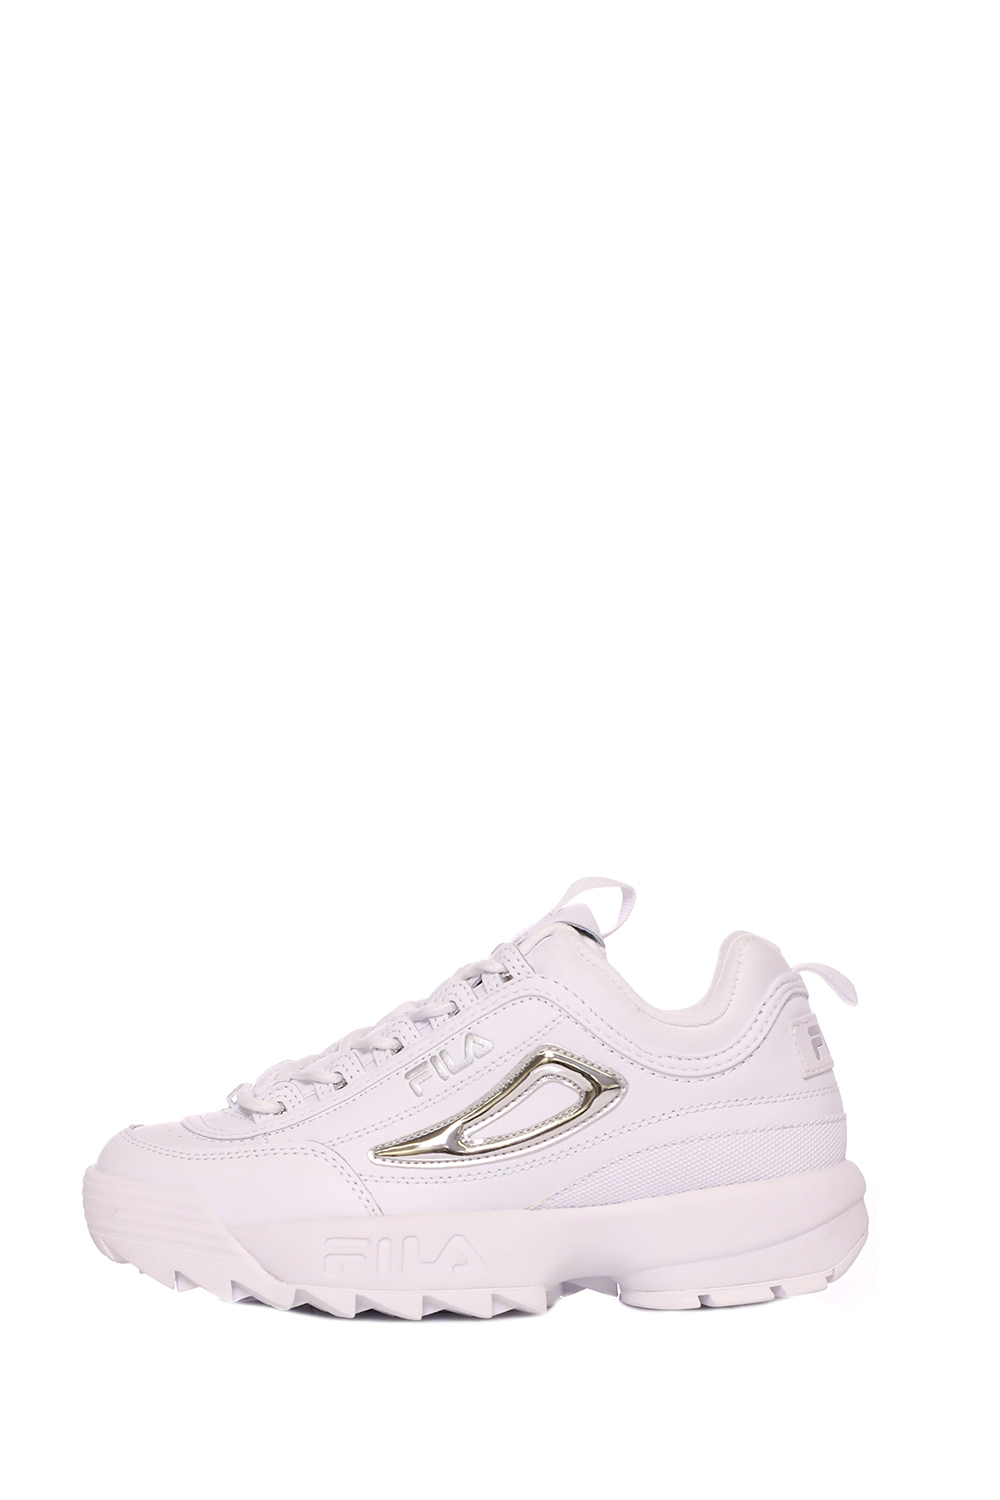 FILA - Γυναικεία sneakers FILA DISRUPTOR II METALLIC λευκά ασημί Γυναικεία/Παπούτσια/Sneakers